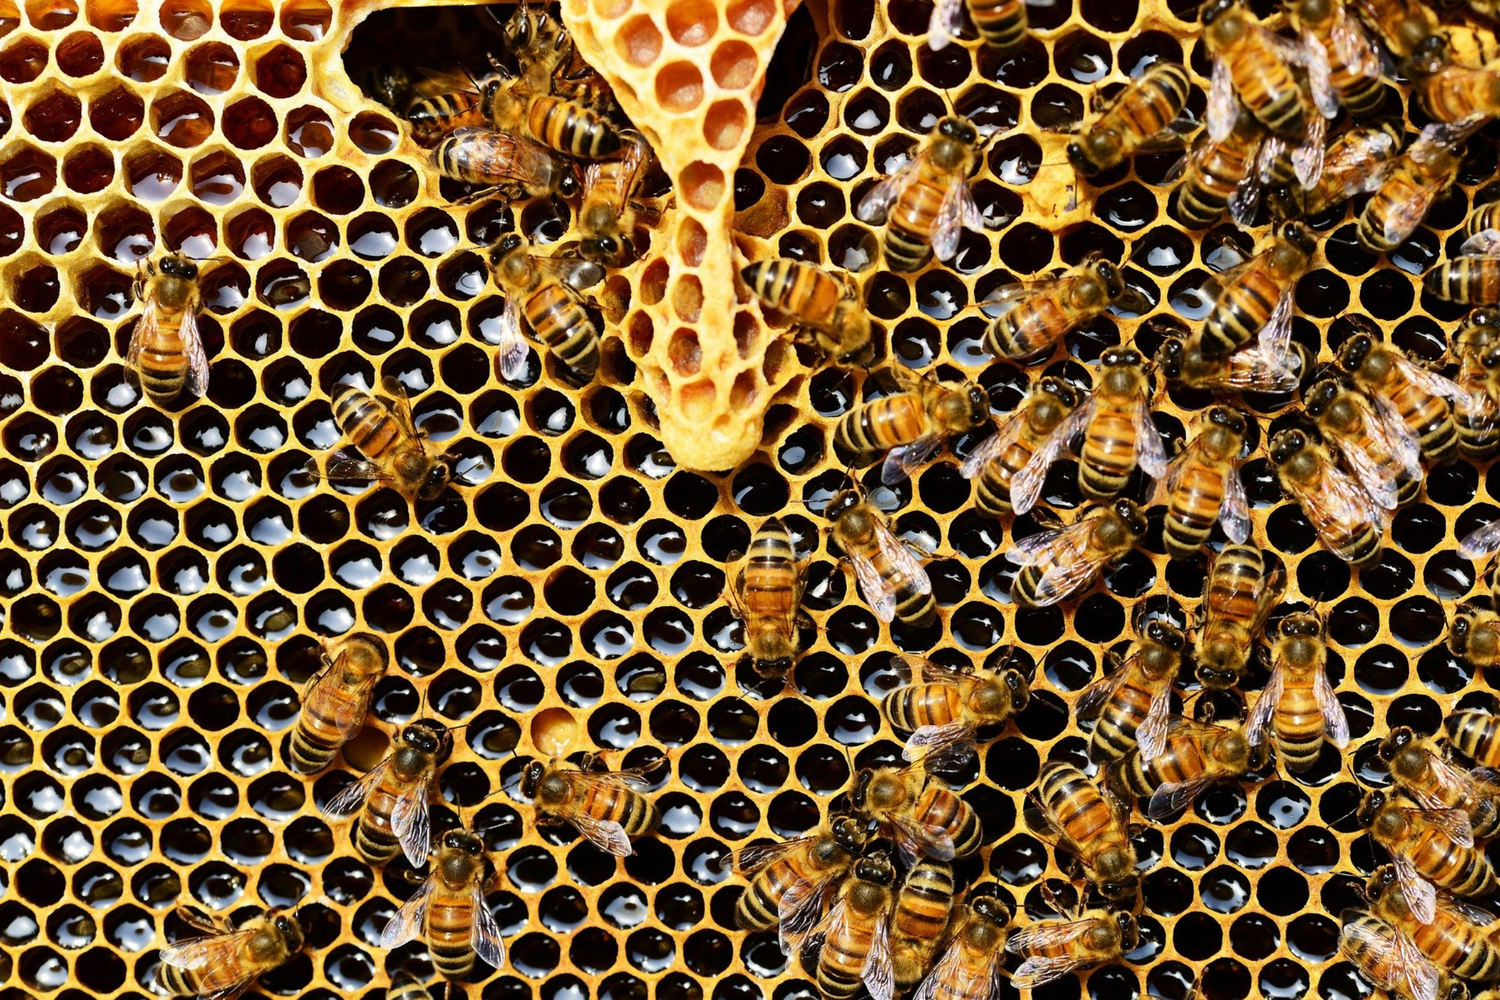 Where honeybees store their honey